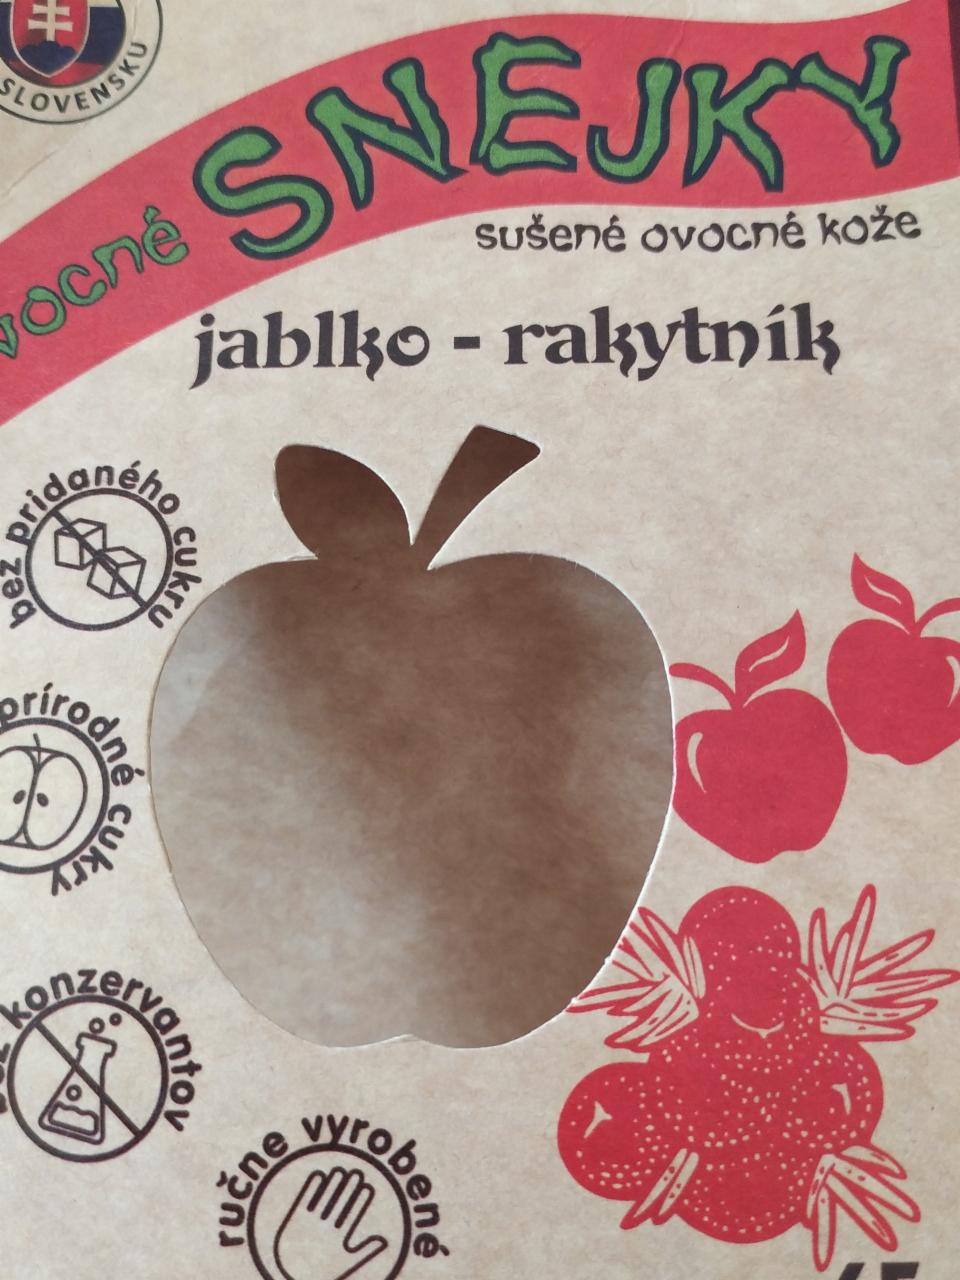 Fotografie - Ovocné snejky sušené ovocné kože jablko - rakytník